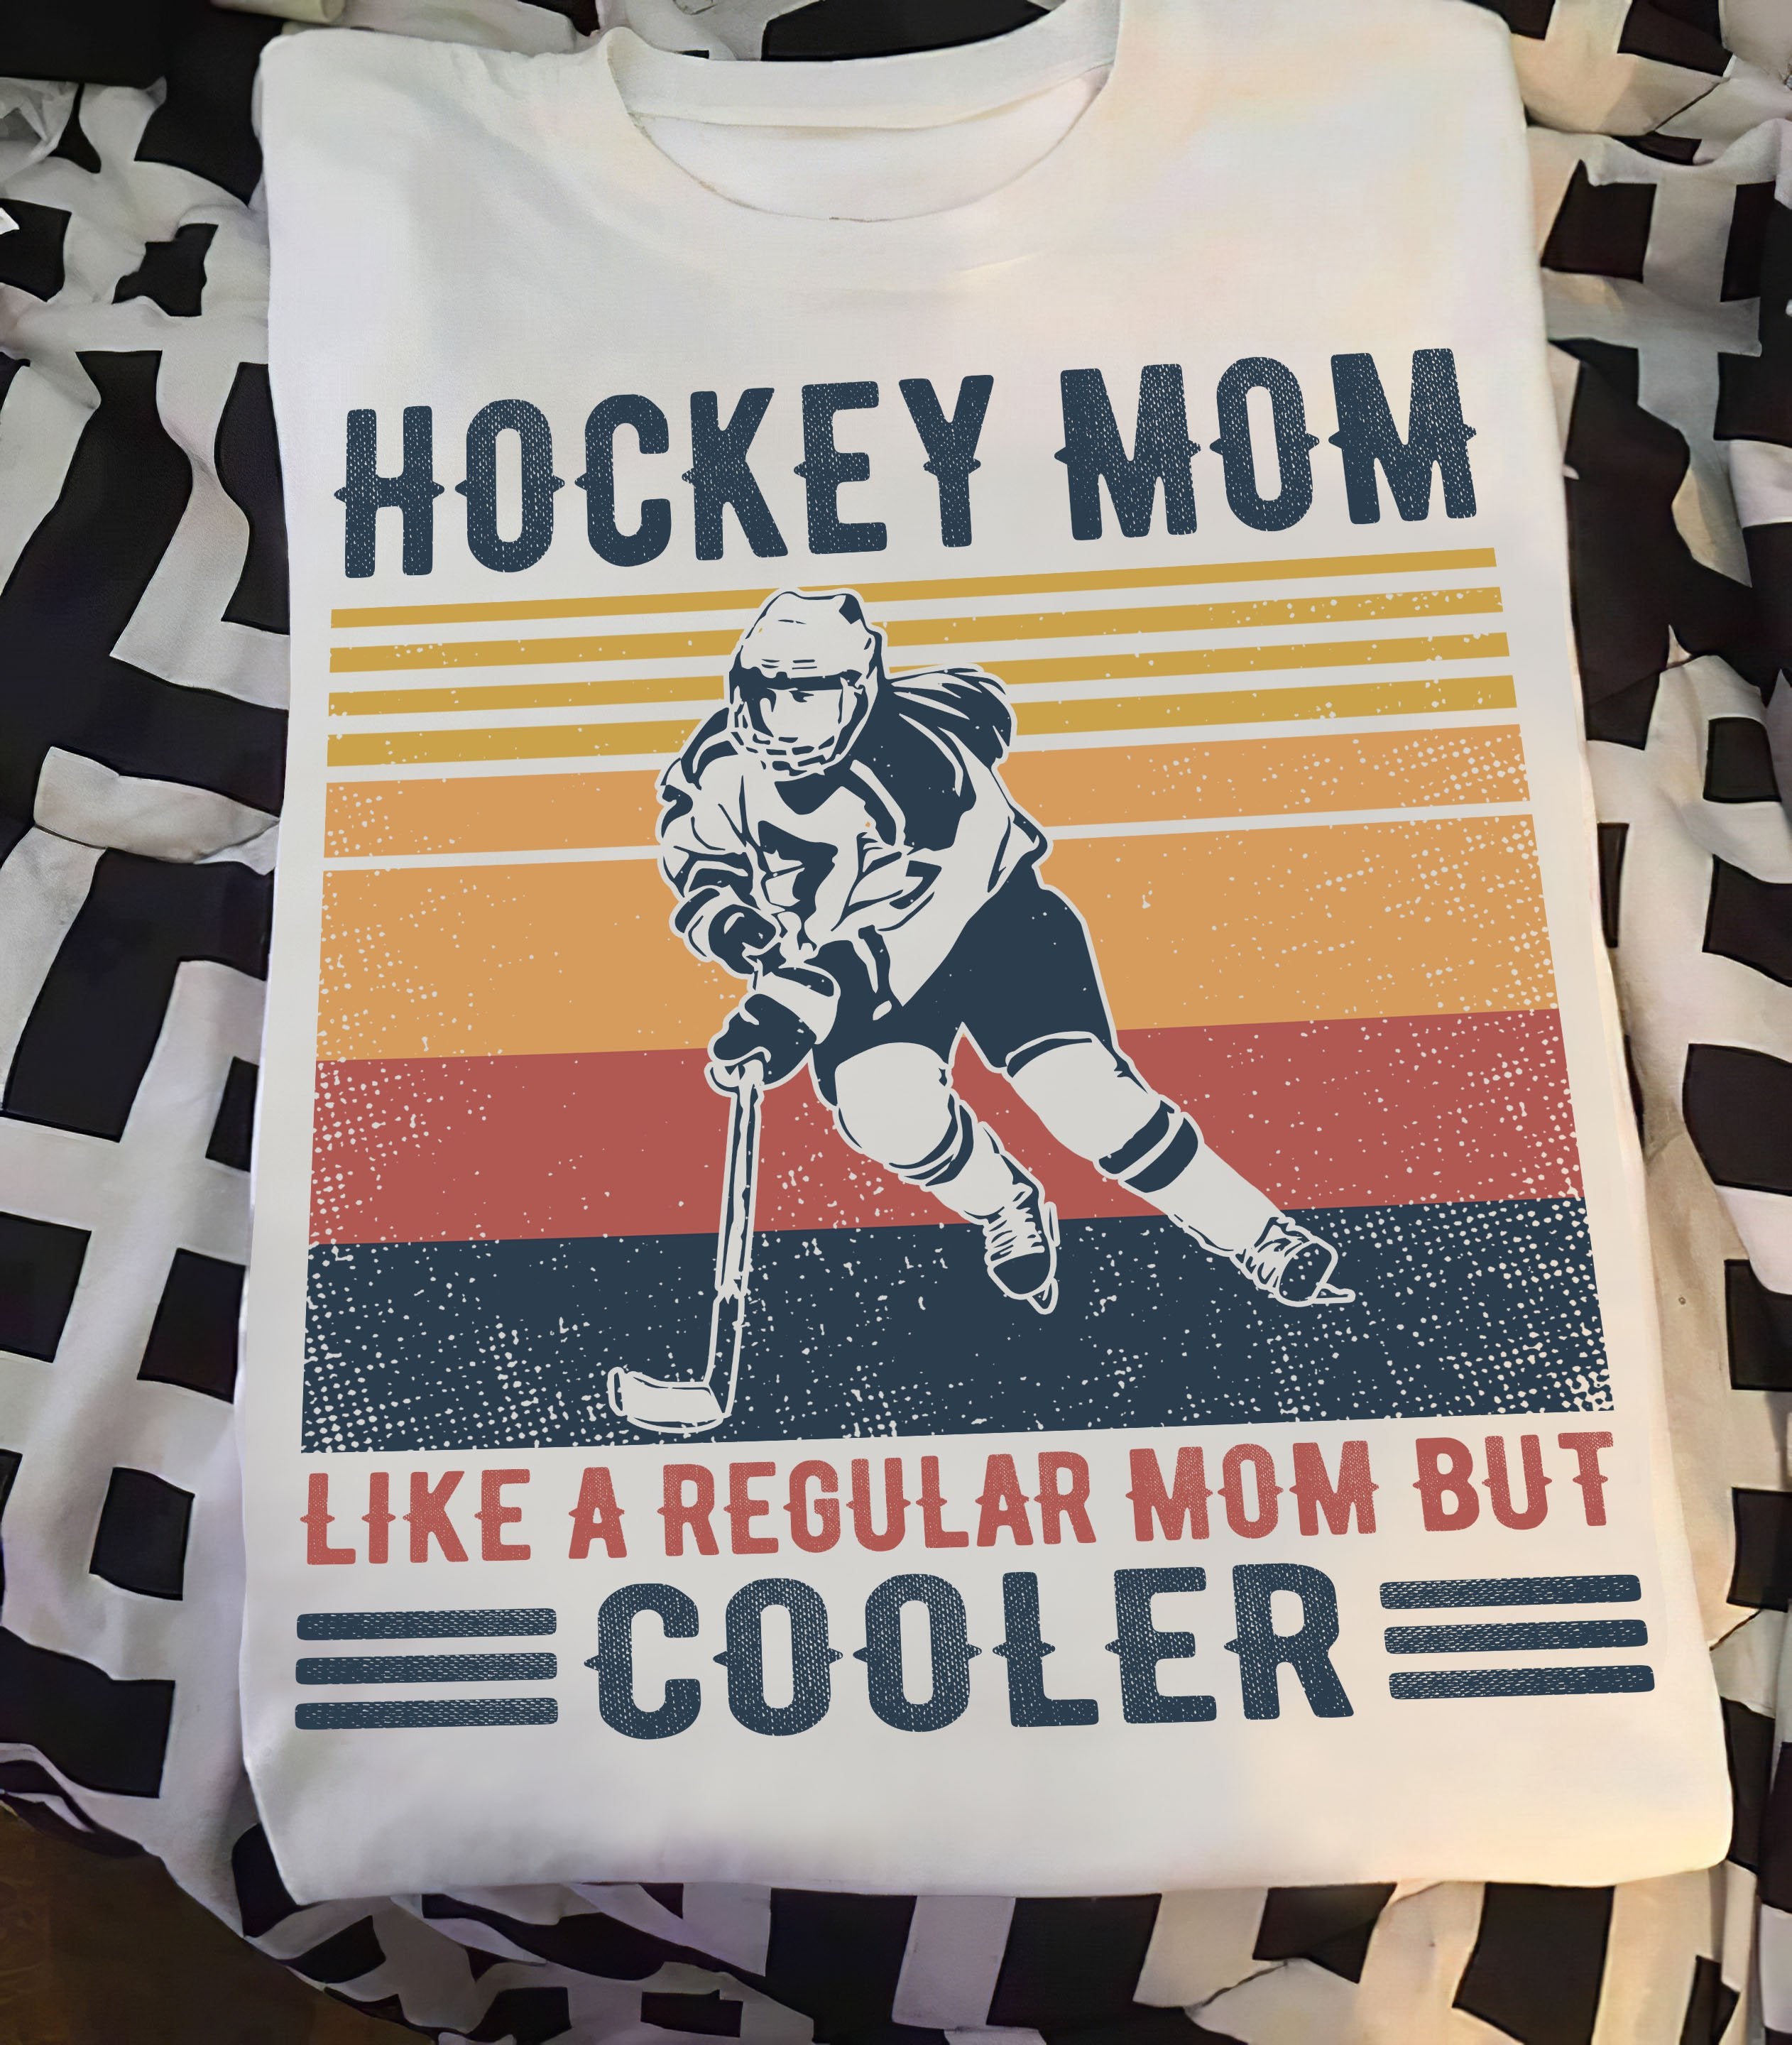 Hockey Mom Like A Regular Mom But Cooler Unisex T-shirt Hoodie Sweatshirt Plus Size S-5xl